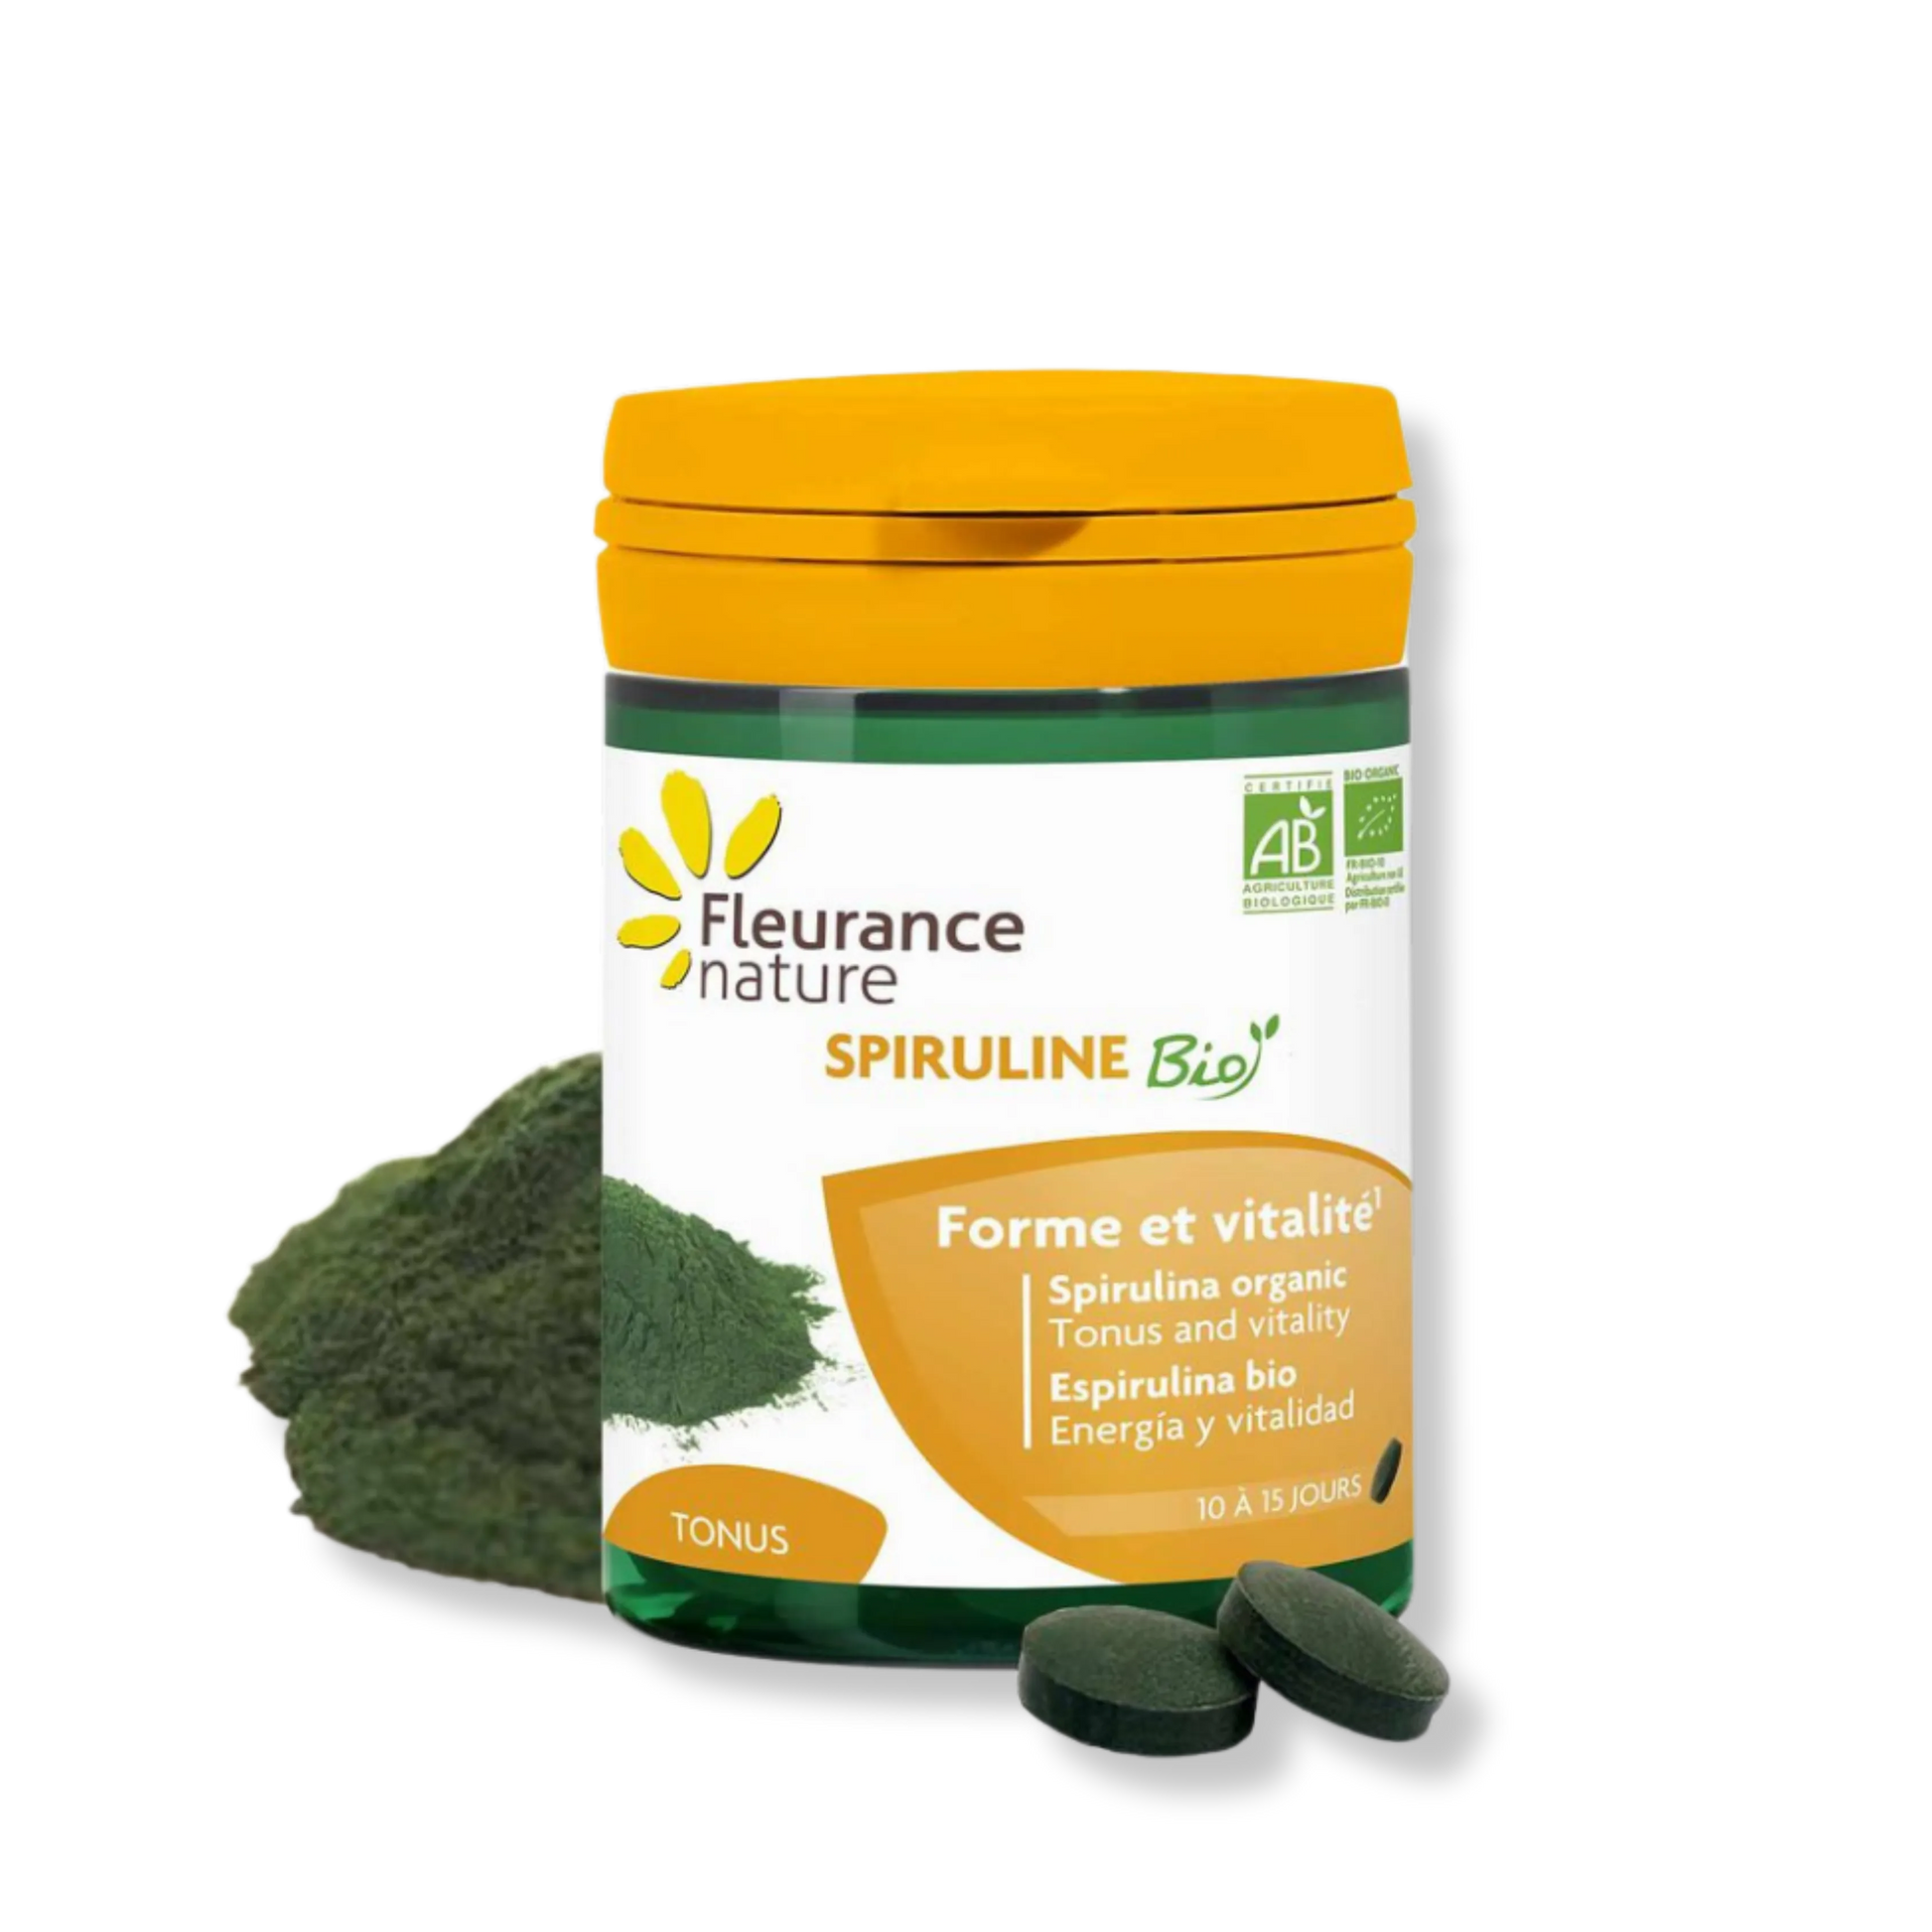 Organic Spirulina Dietary Supplement For Occasional Fatigue - Vegan - Pure n' Bio